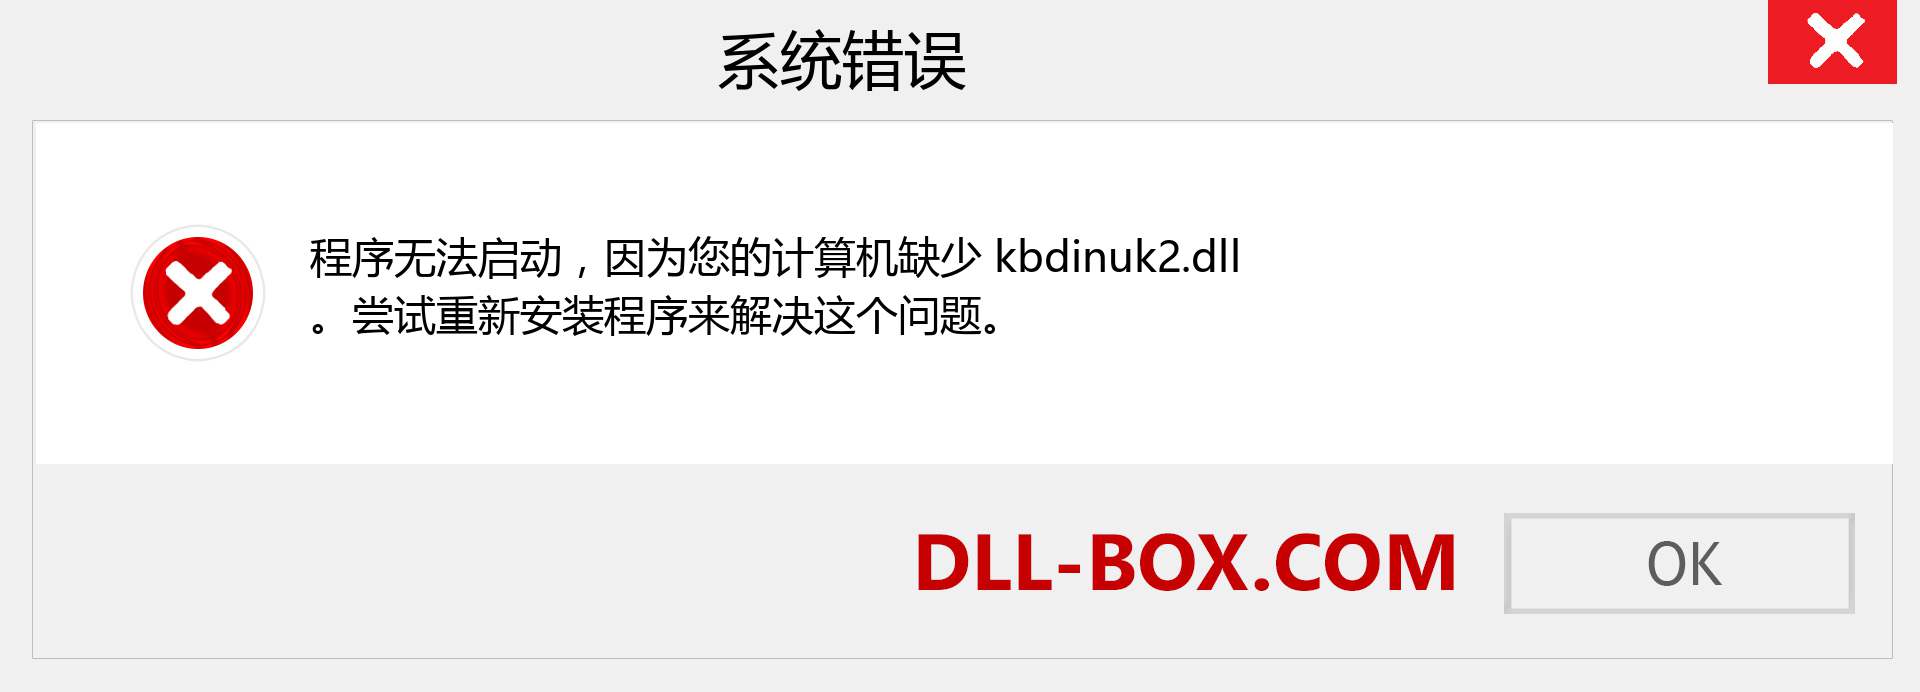 kbdinuk2.dll 文件丢失？。 适用于 Windows 7、8、10 的下载 - 修复 Windows、照片、图像上的 kbdinuk2 dll 丢失错误